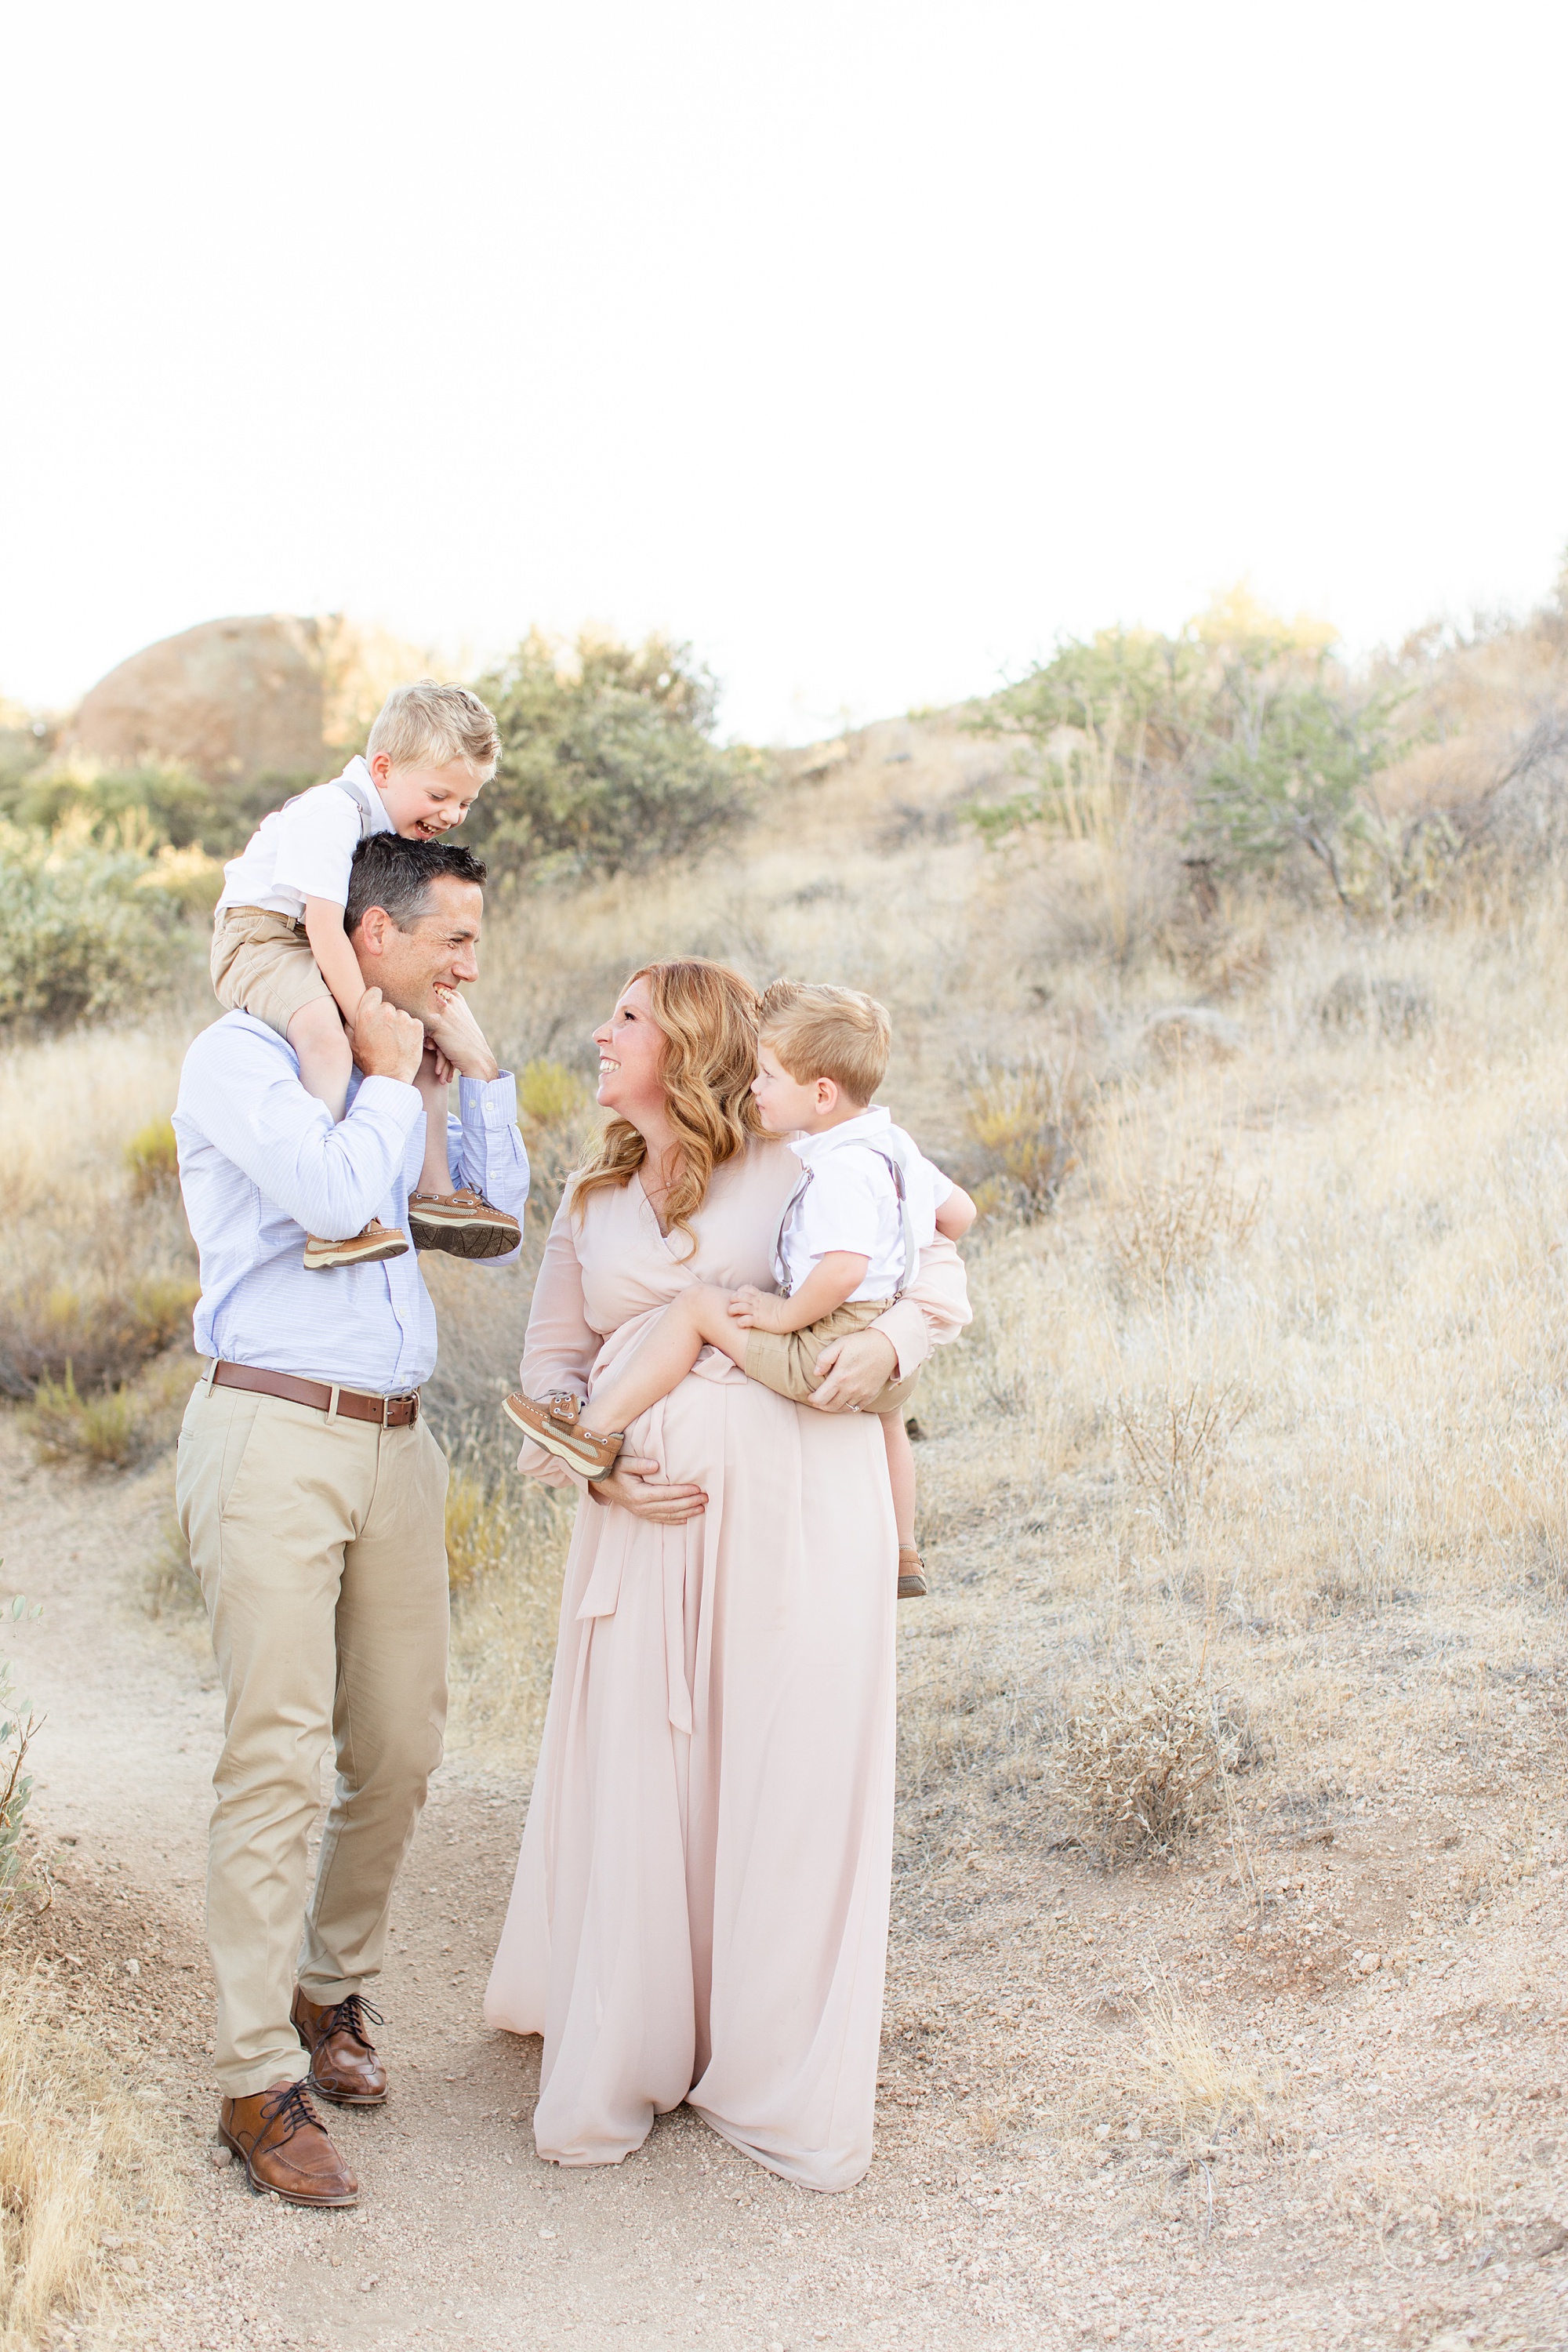 Scottsdale AZ Maternity Session with Amy & Jordan Photography